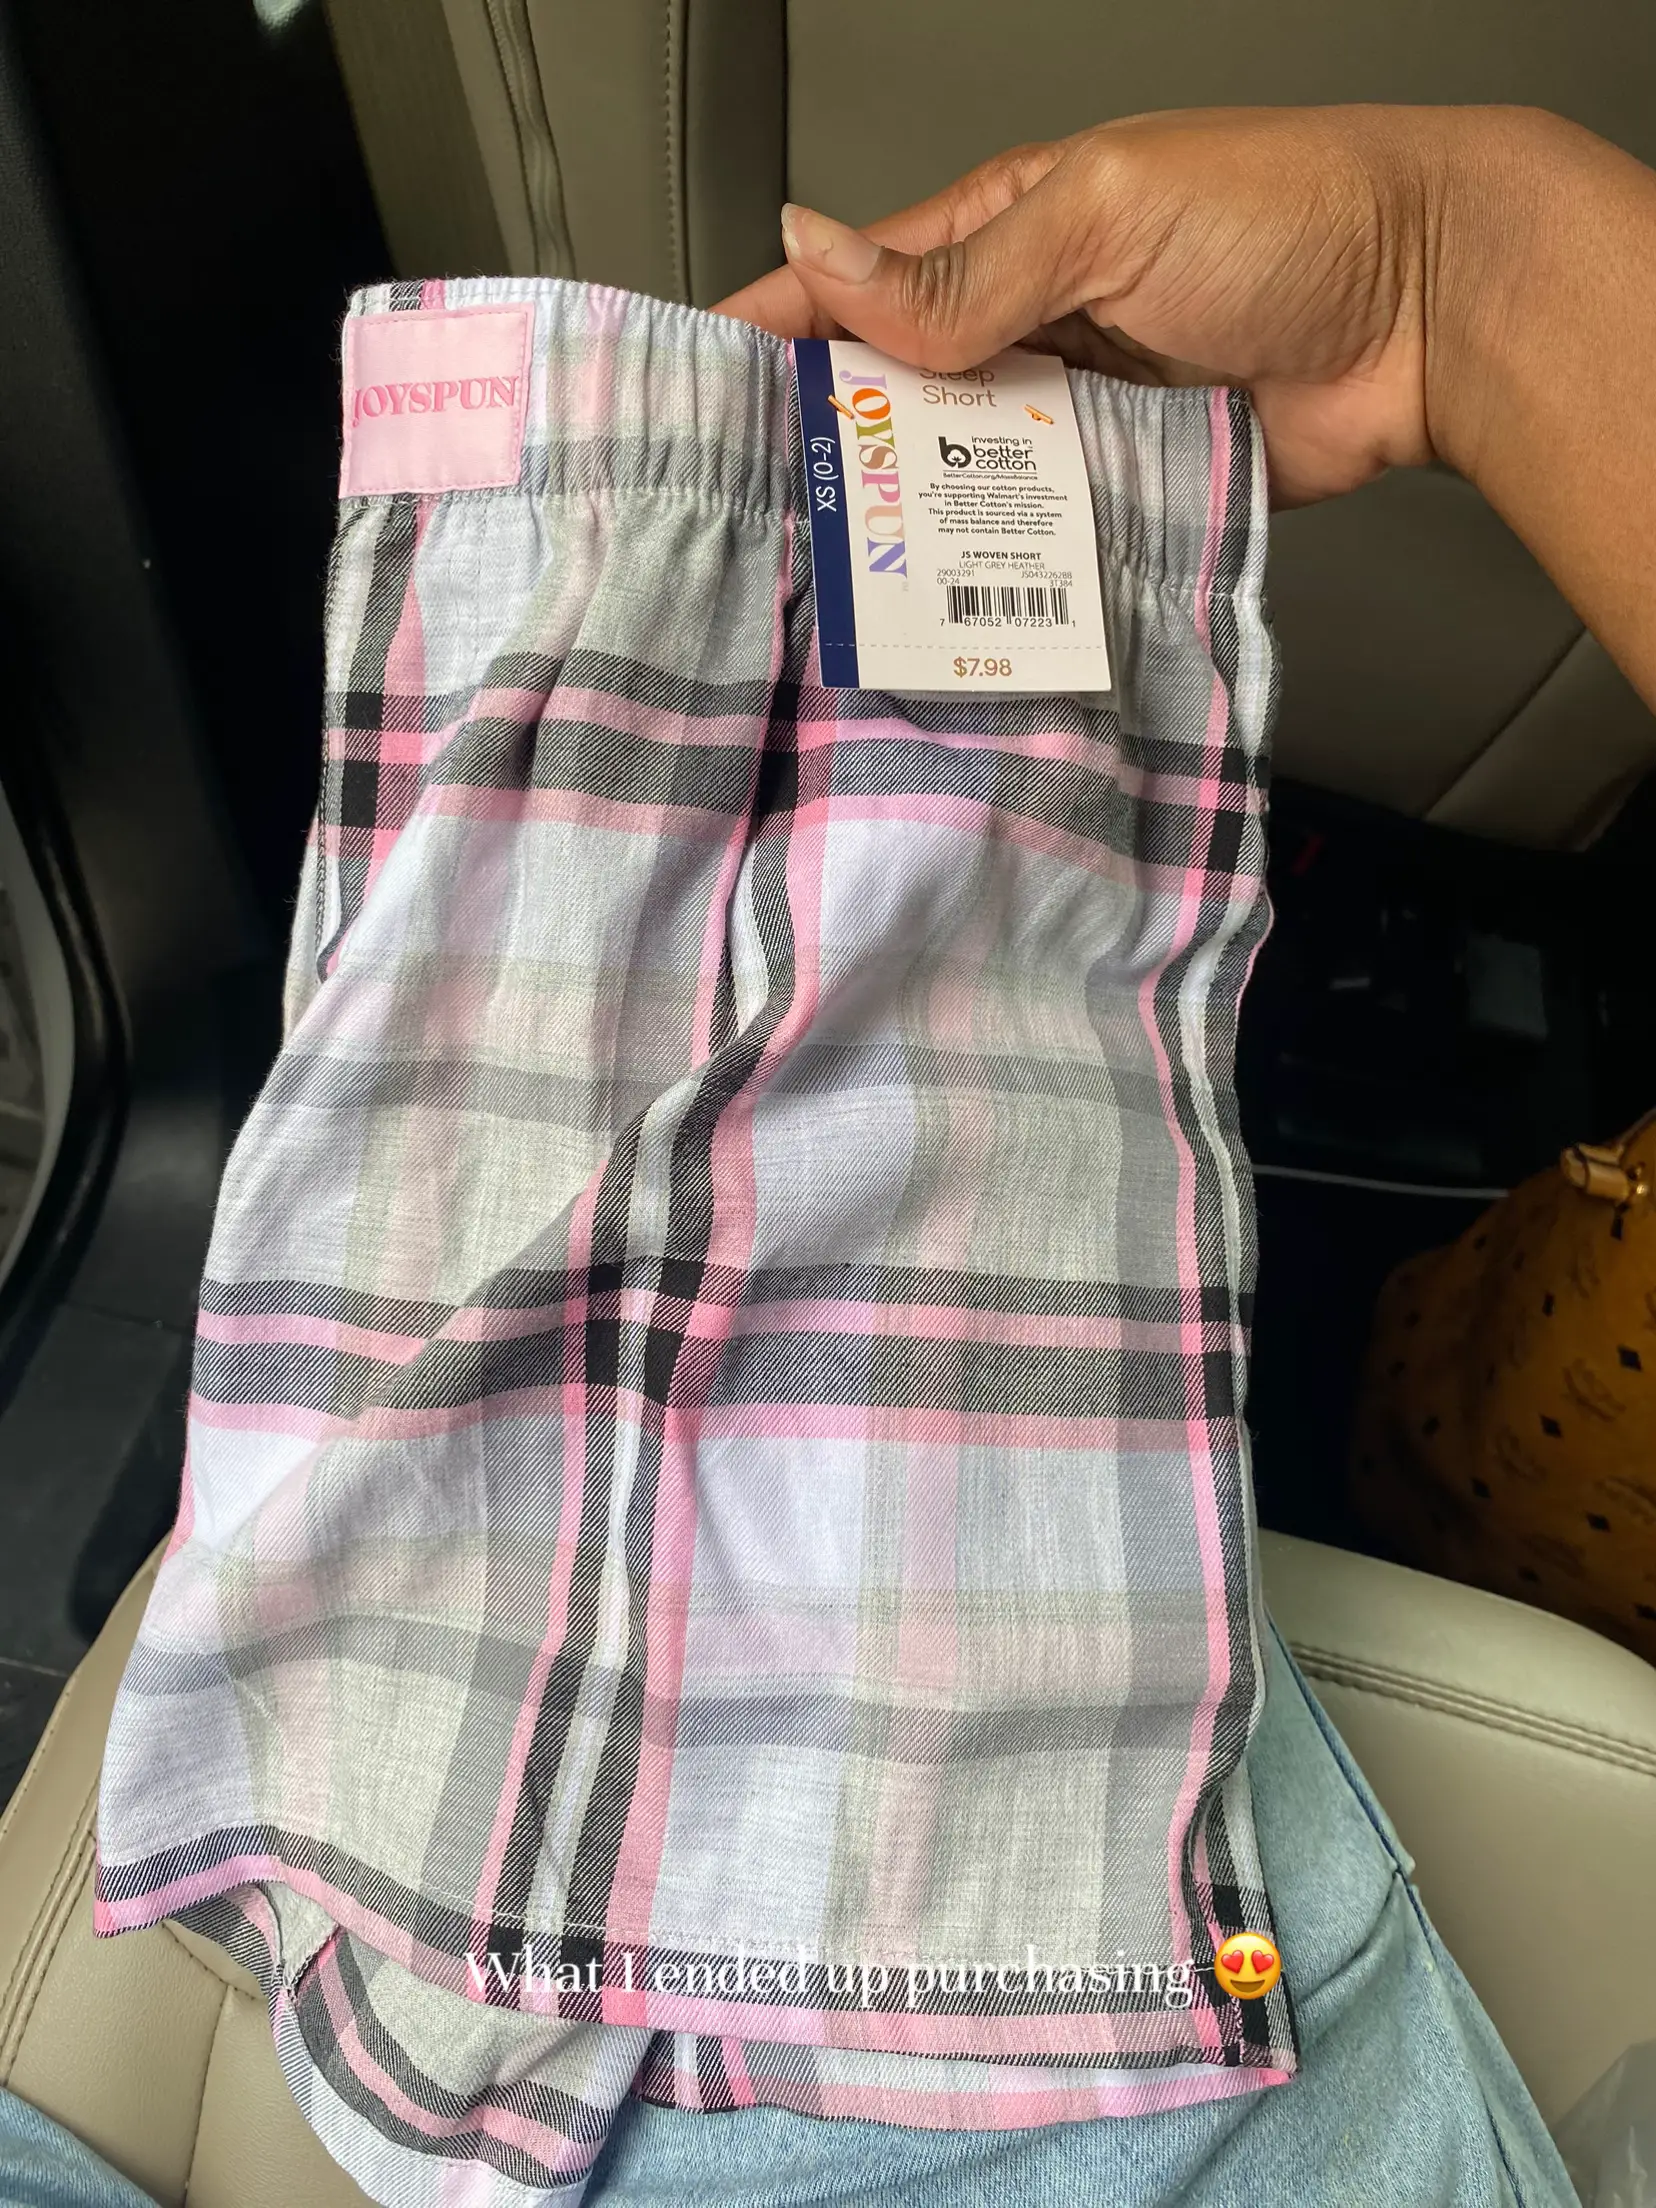 Joyspun Womens Cheeky Panties, 3-Pack, Sizes XS to India